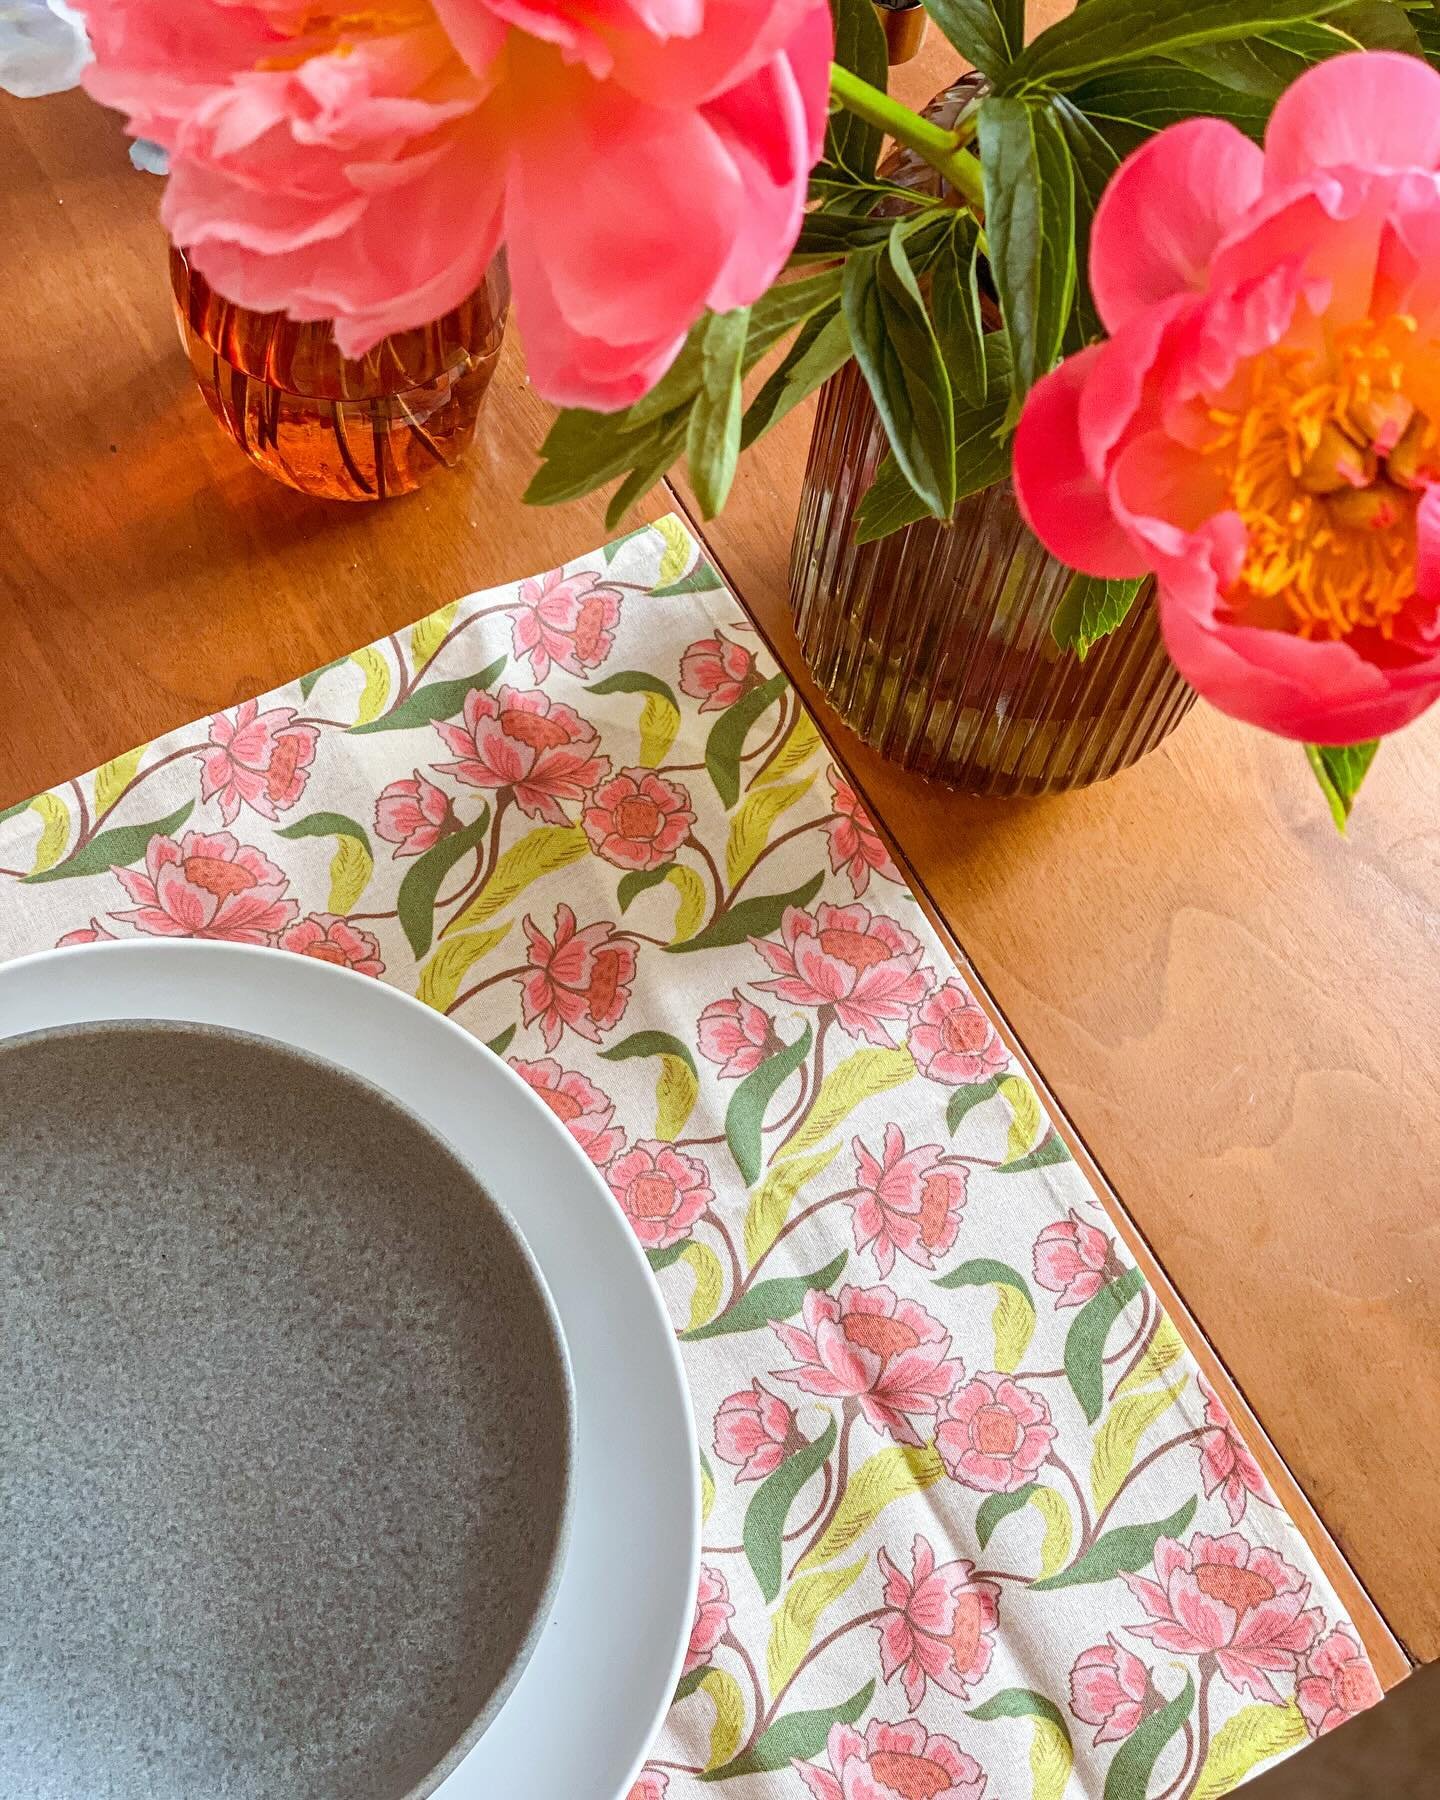 Pink blooms for your table and kitchen. 
.
.
.
#teatowels #tabledecor #tablescape #clothnapkins #floralpatterns #botanicalart #surfacepatterndesign #inspiredbyflowers #remusedstudio #primavera #springdecor #shopsmall #mothersdaygifts